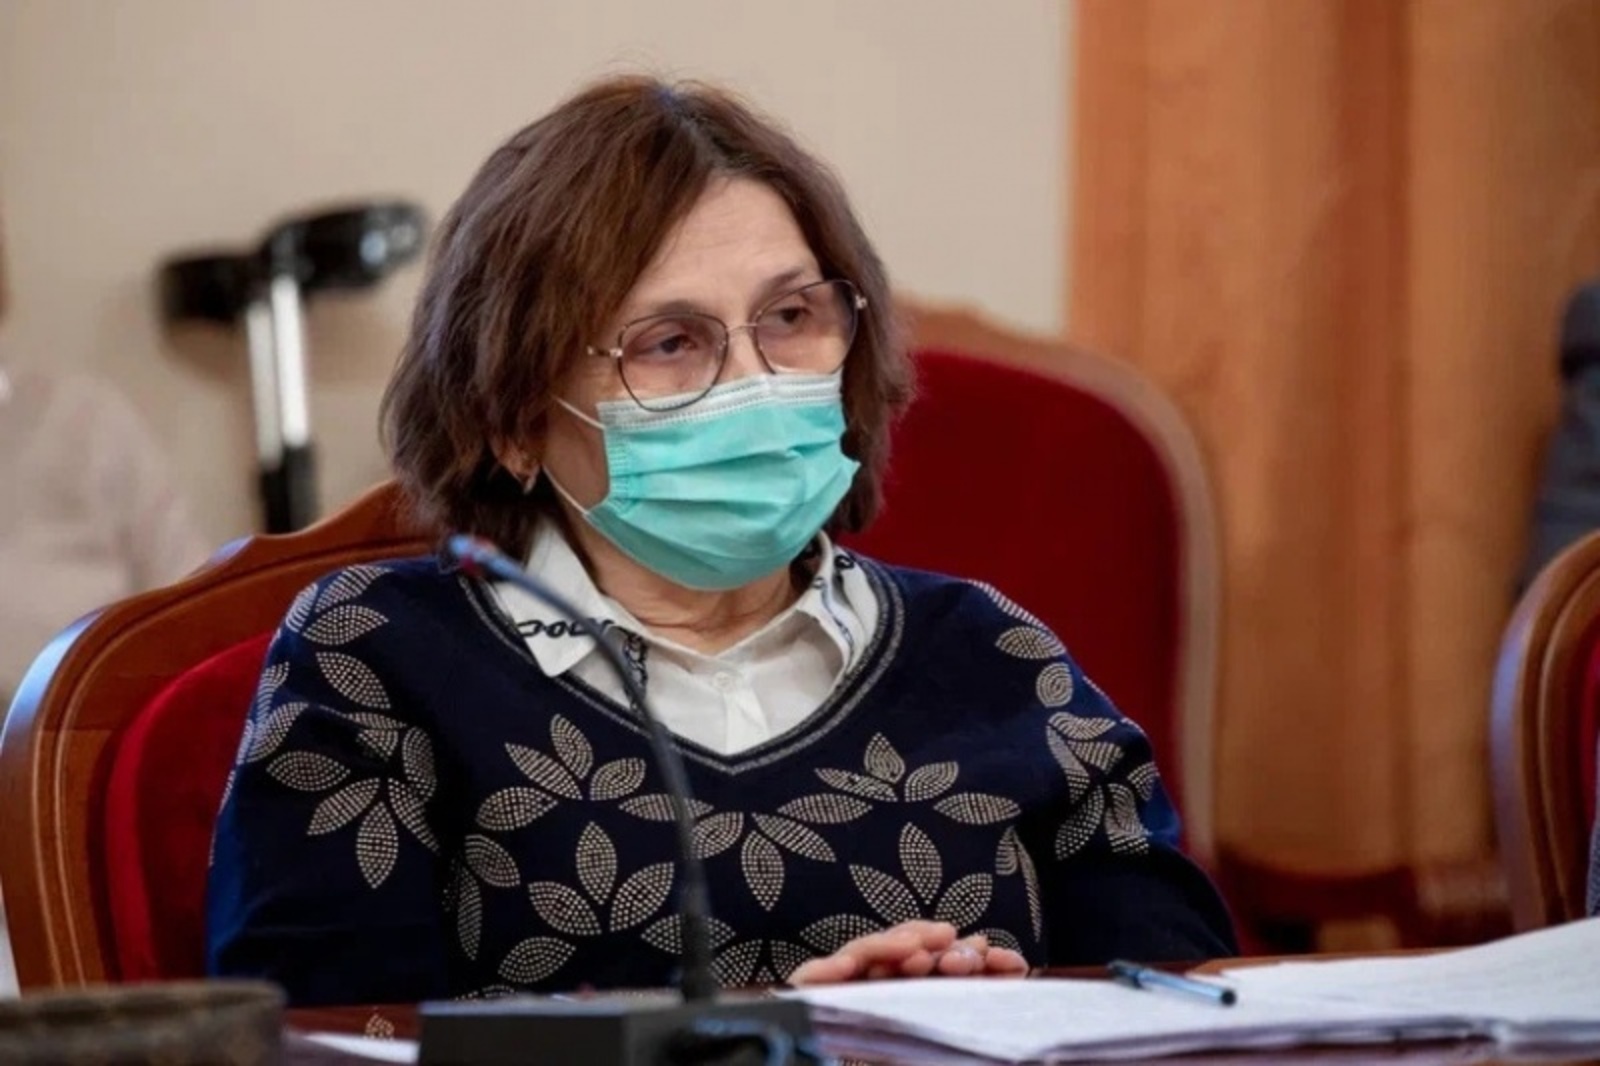 Кандидата медицинских наук из Башкирии затравили в интернете после ее слов о вакцинации